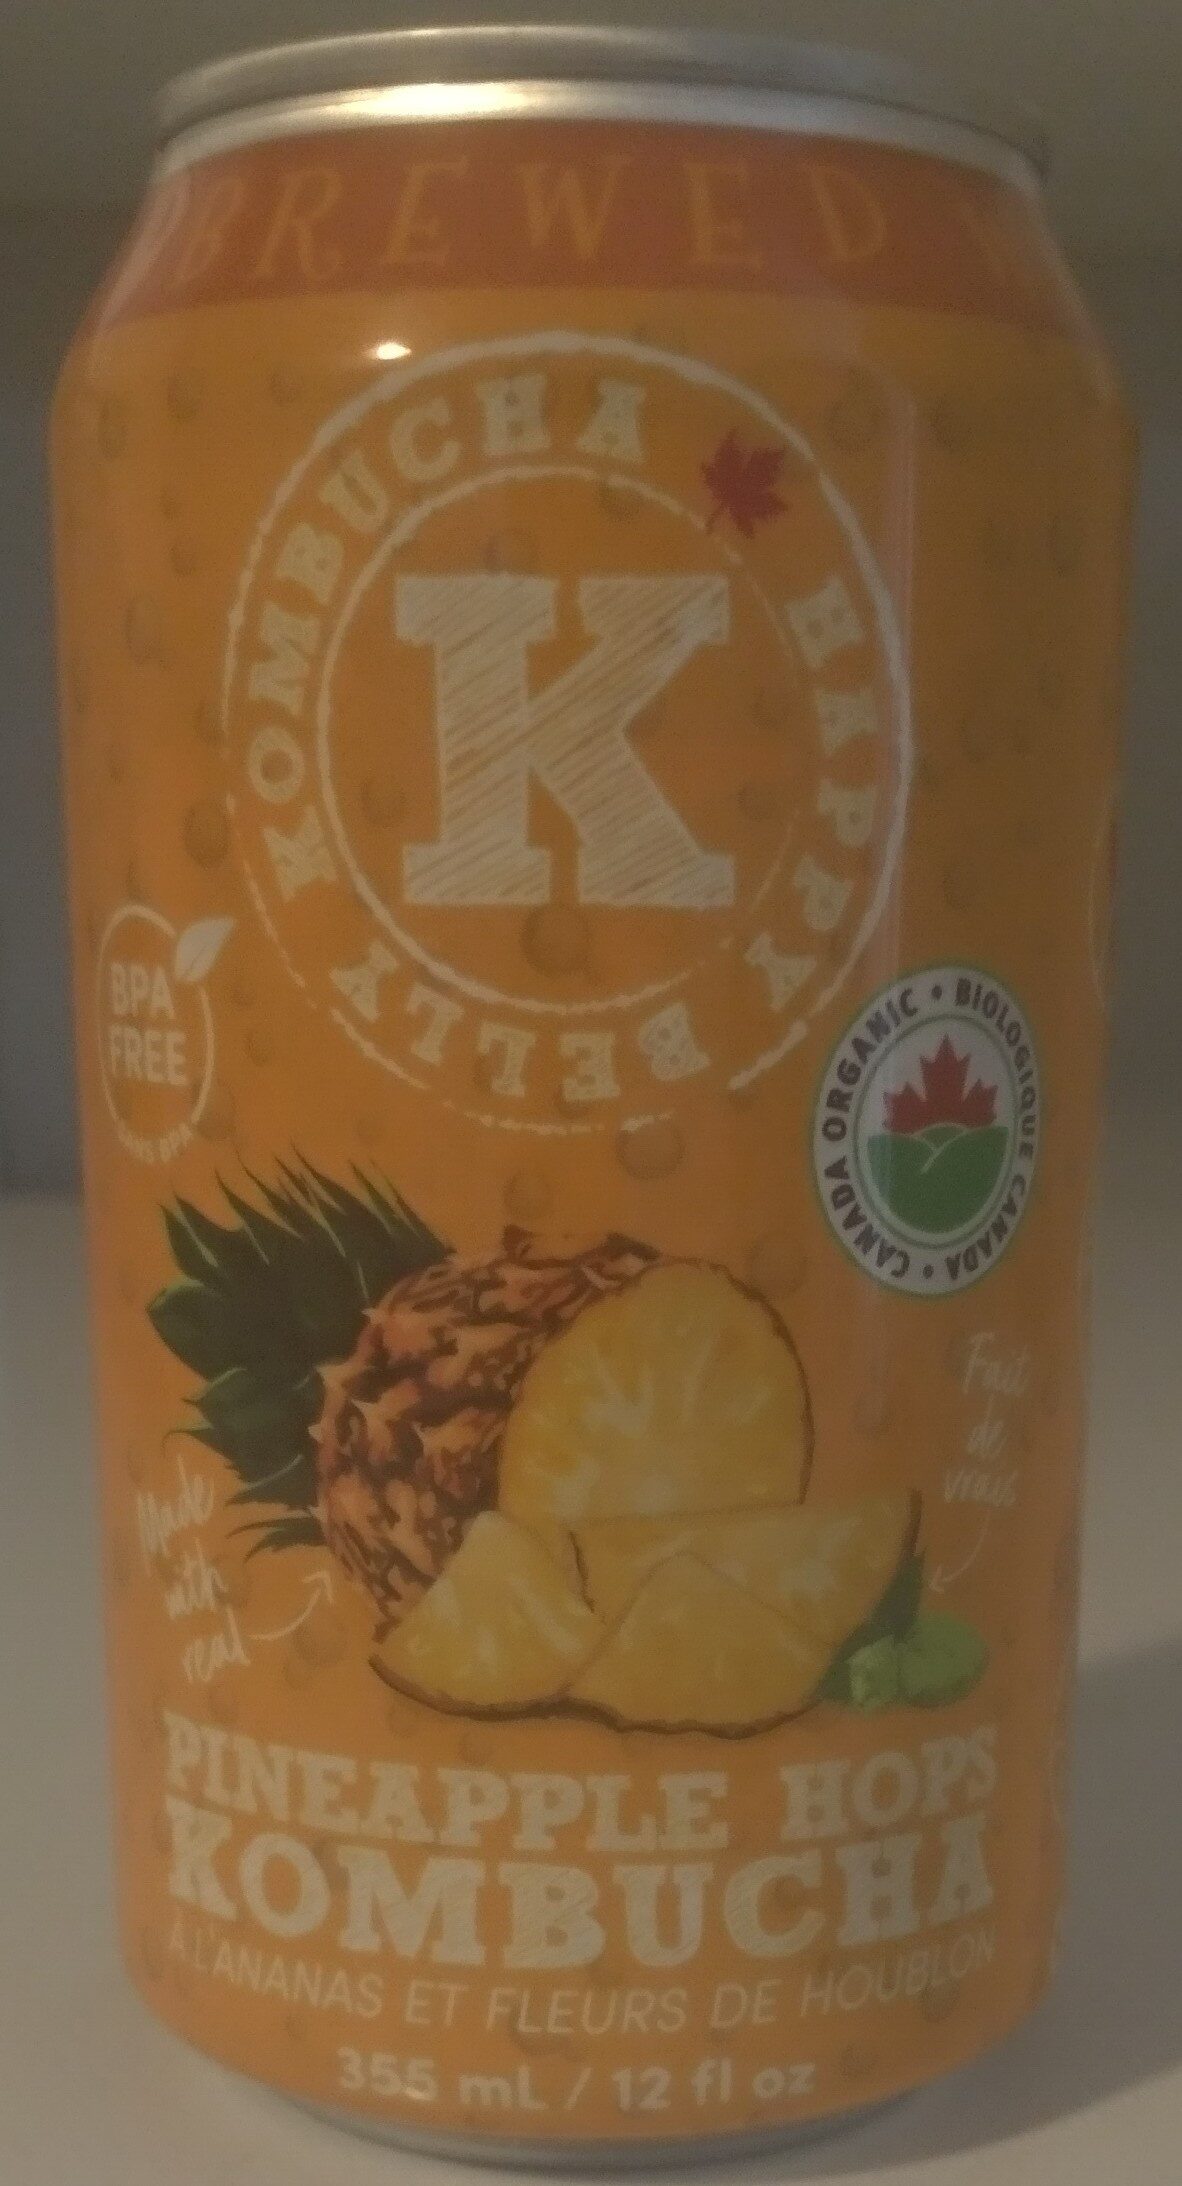 Pineapple Hops Kombucha - Product